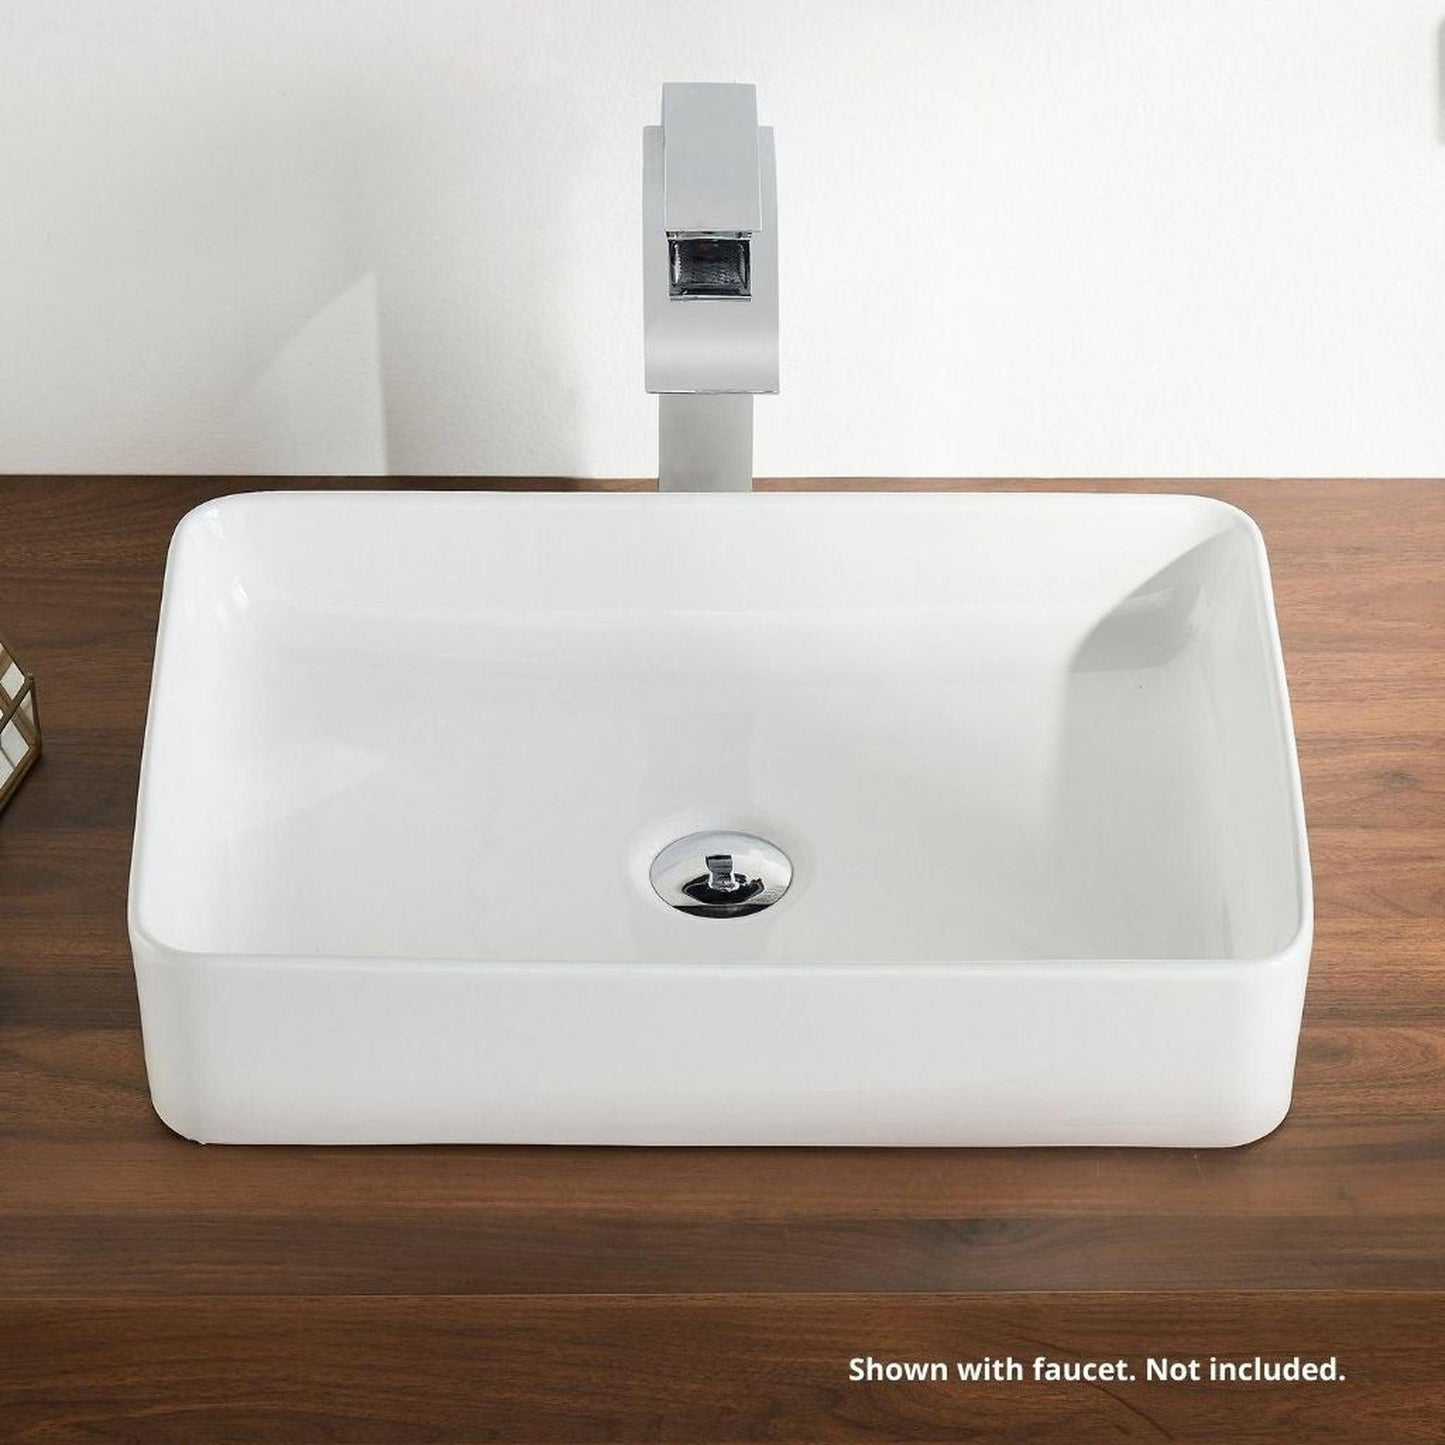 DeerValley DV-1V032 14" x 20" x 4" White Rectangular Ceramic Vessel Sink